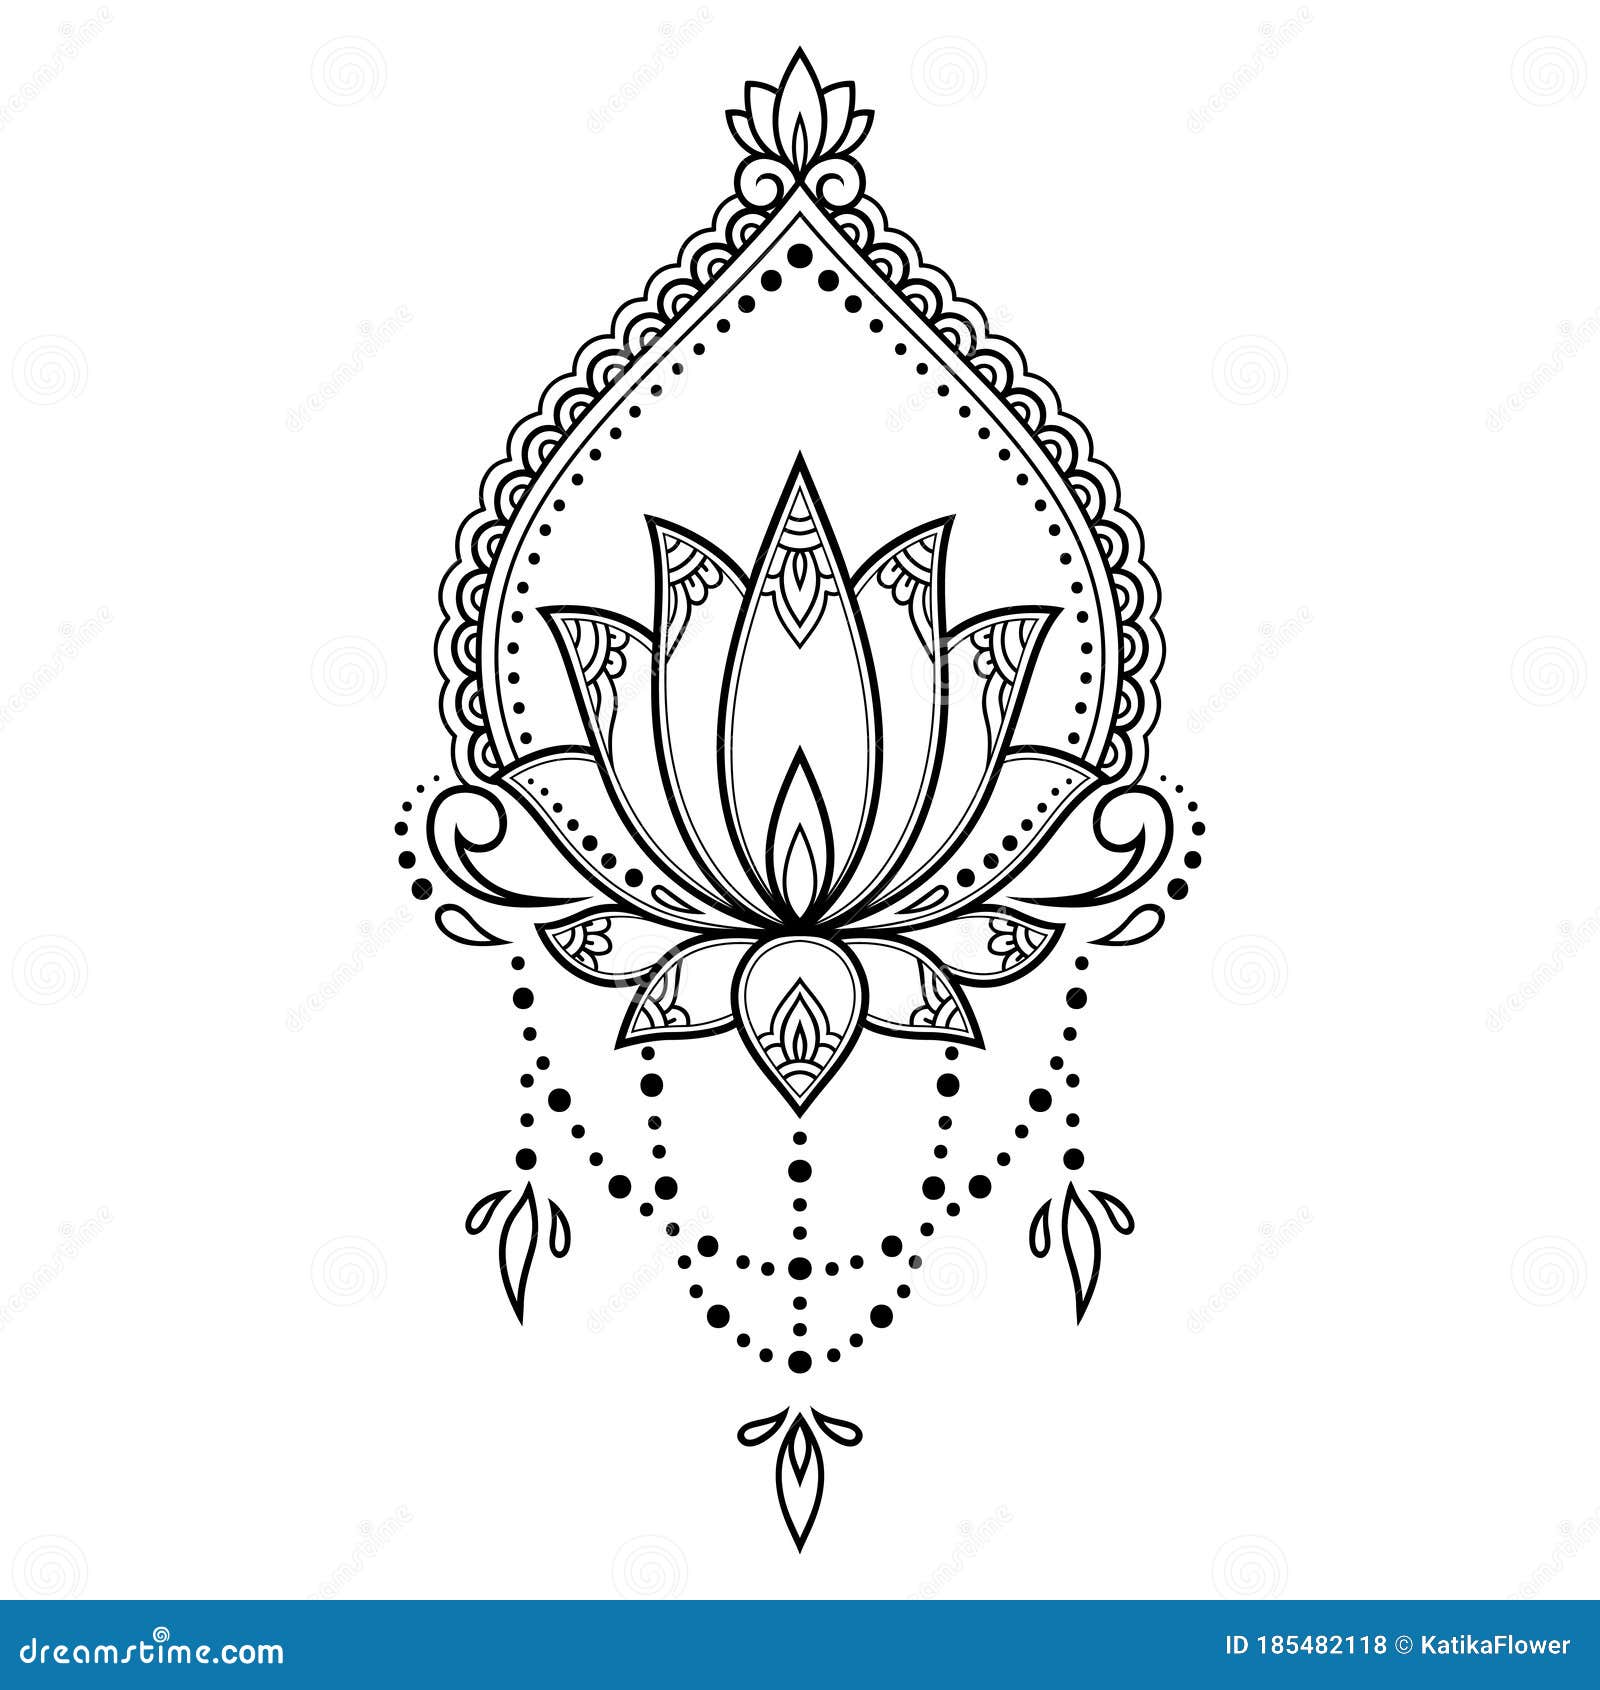 Flowers Drawings  Lotus mandala tattoo Mandalatattoo  Flickr